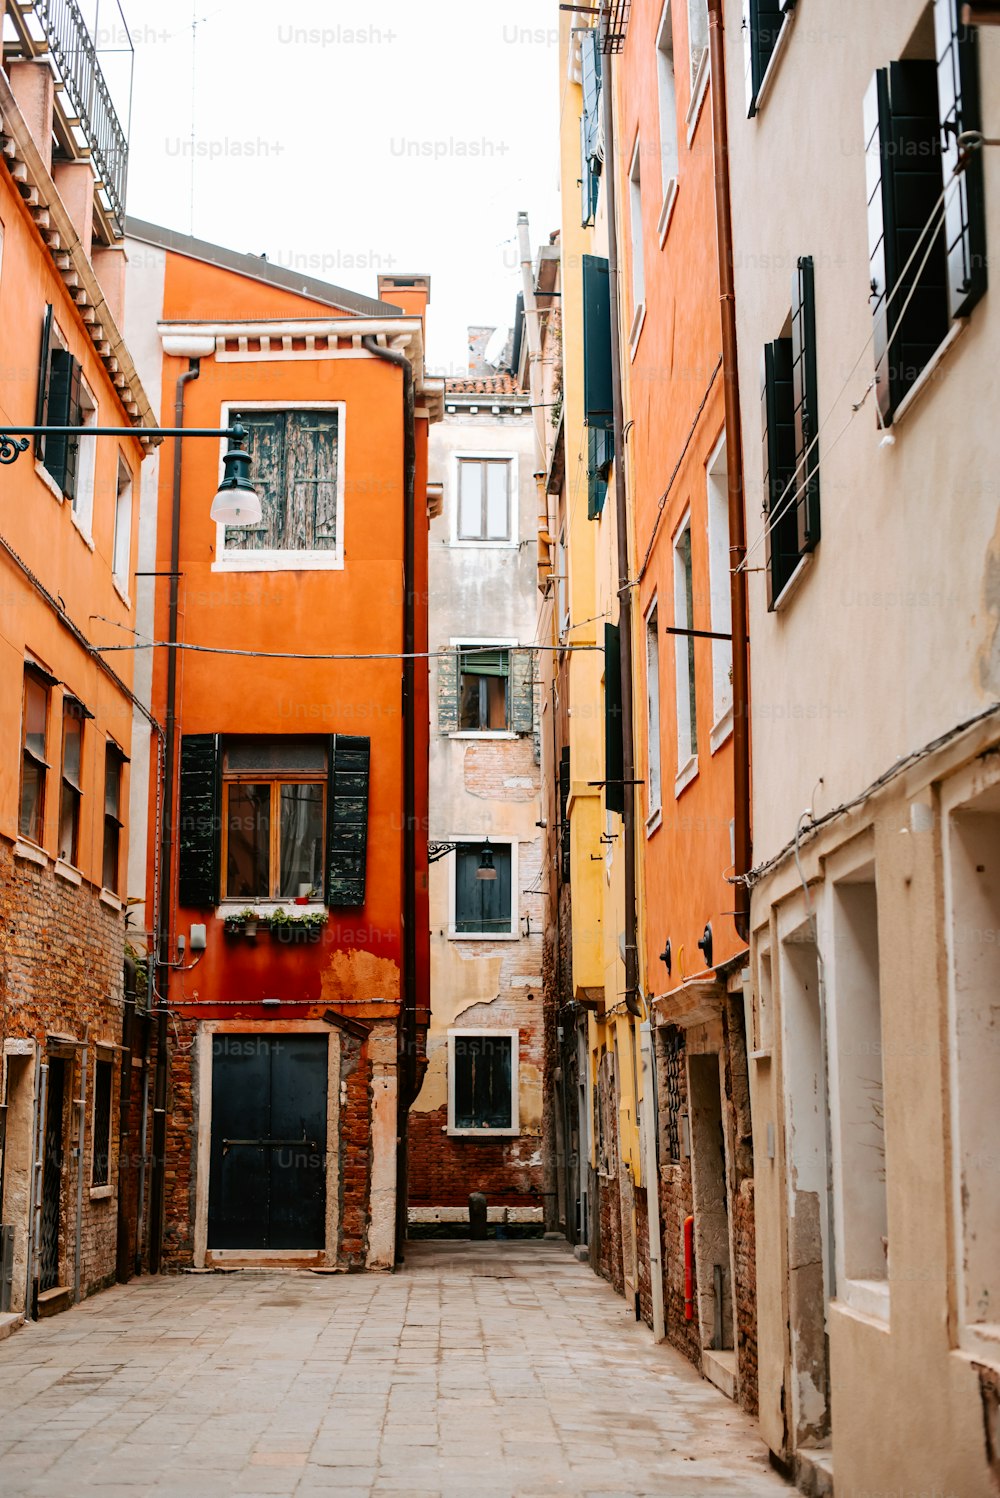 a narrow alleyway in a city with orange buildings